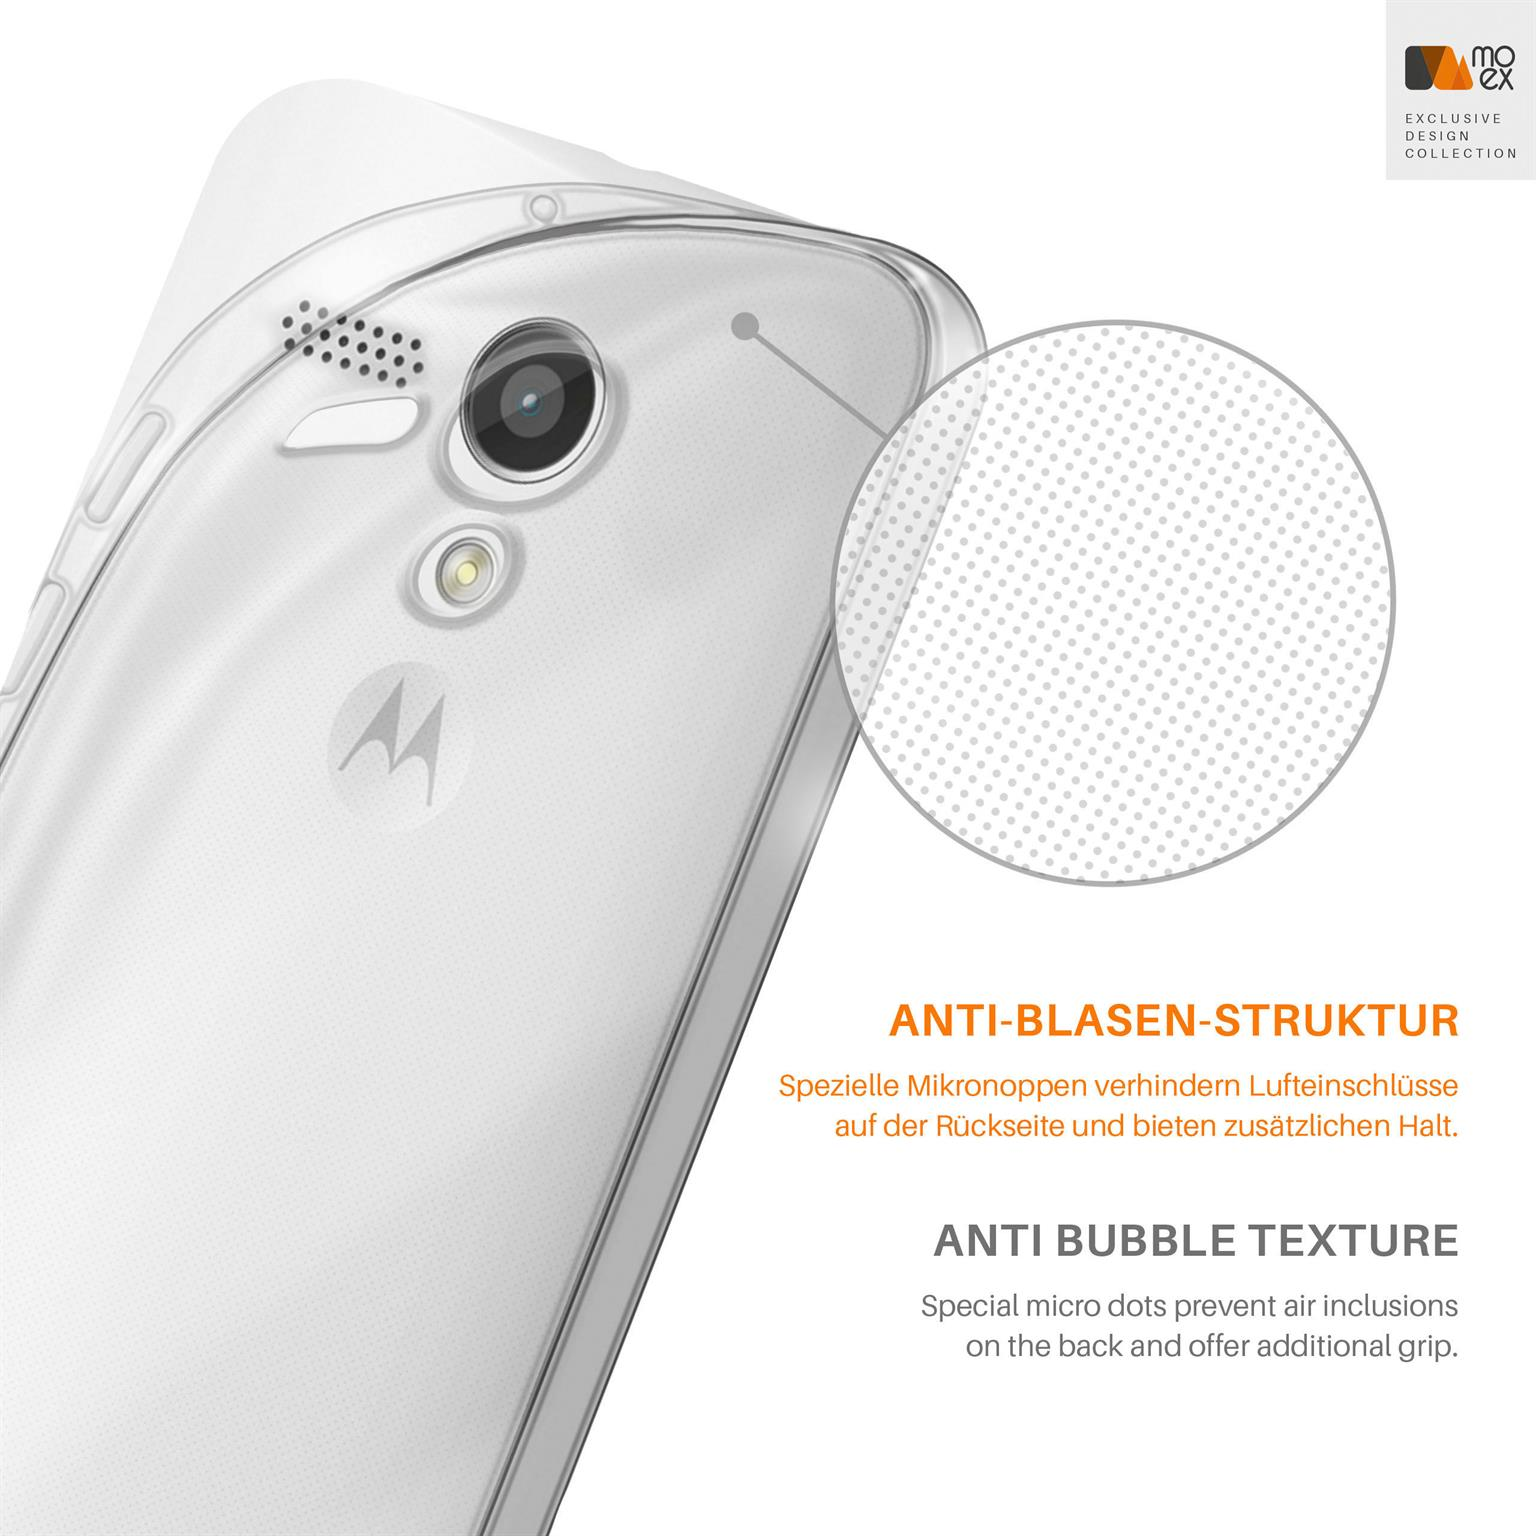 MOEX Case, Motorola, Backcover, Aero Crystal-Clear G, Moto